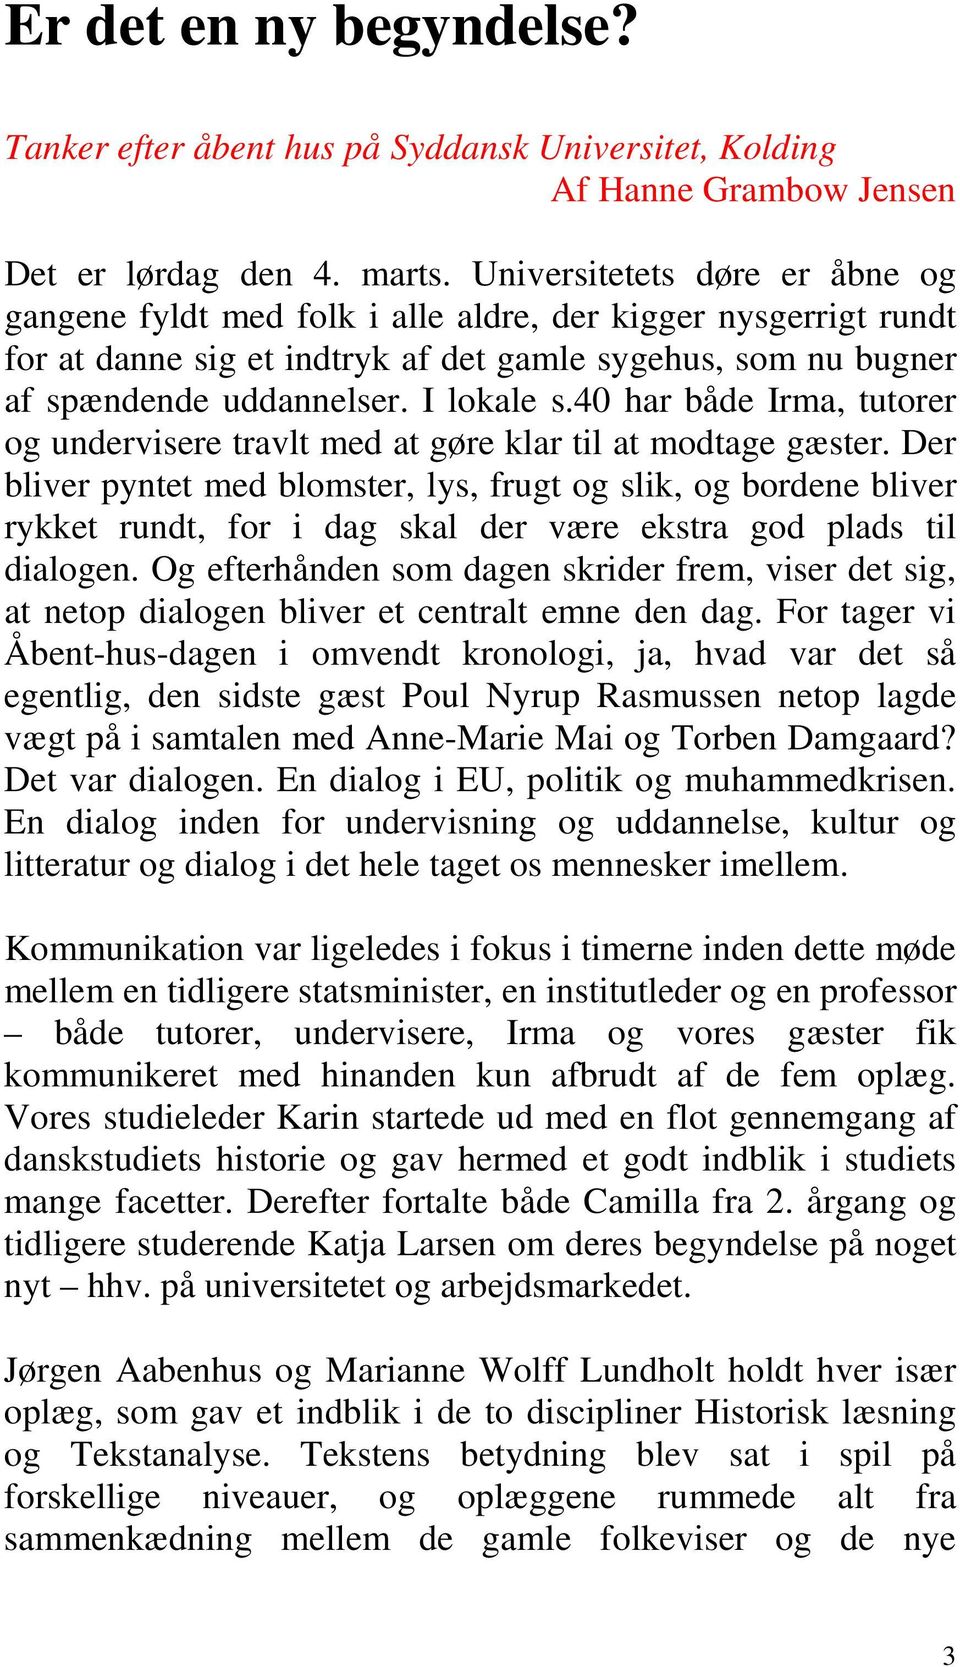 HvadErMItNavn? Redaktionen 2006 (På billedet mangler Hanne Grambow Jensen  og Anne Mette Møller Kristensen) - PDF Free Download